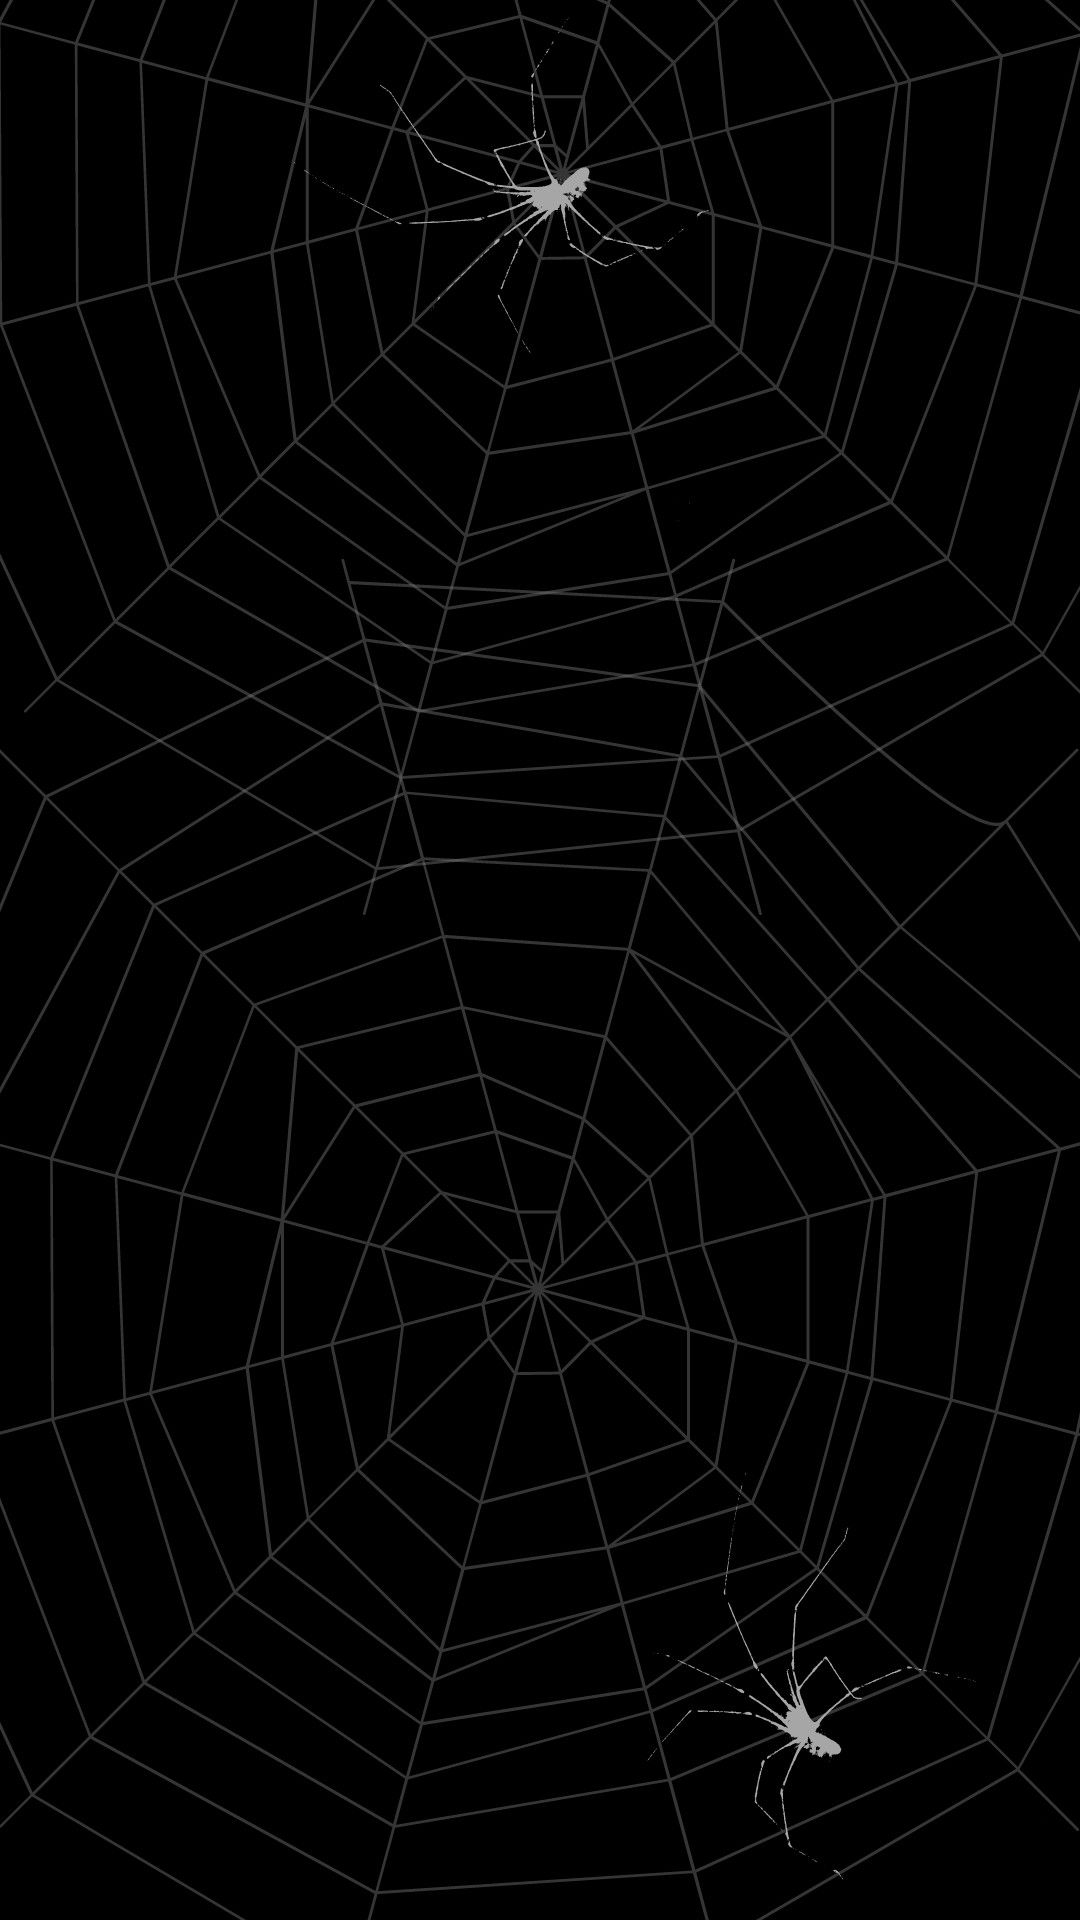 1080x1920 wallpaper #cobweb #spider in 2022 | Black wallpaper, Wallpaper, Cobweb